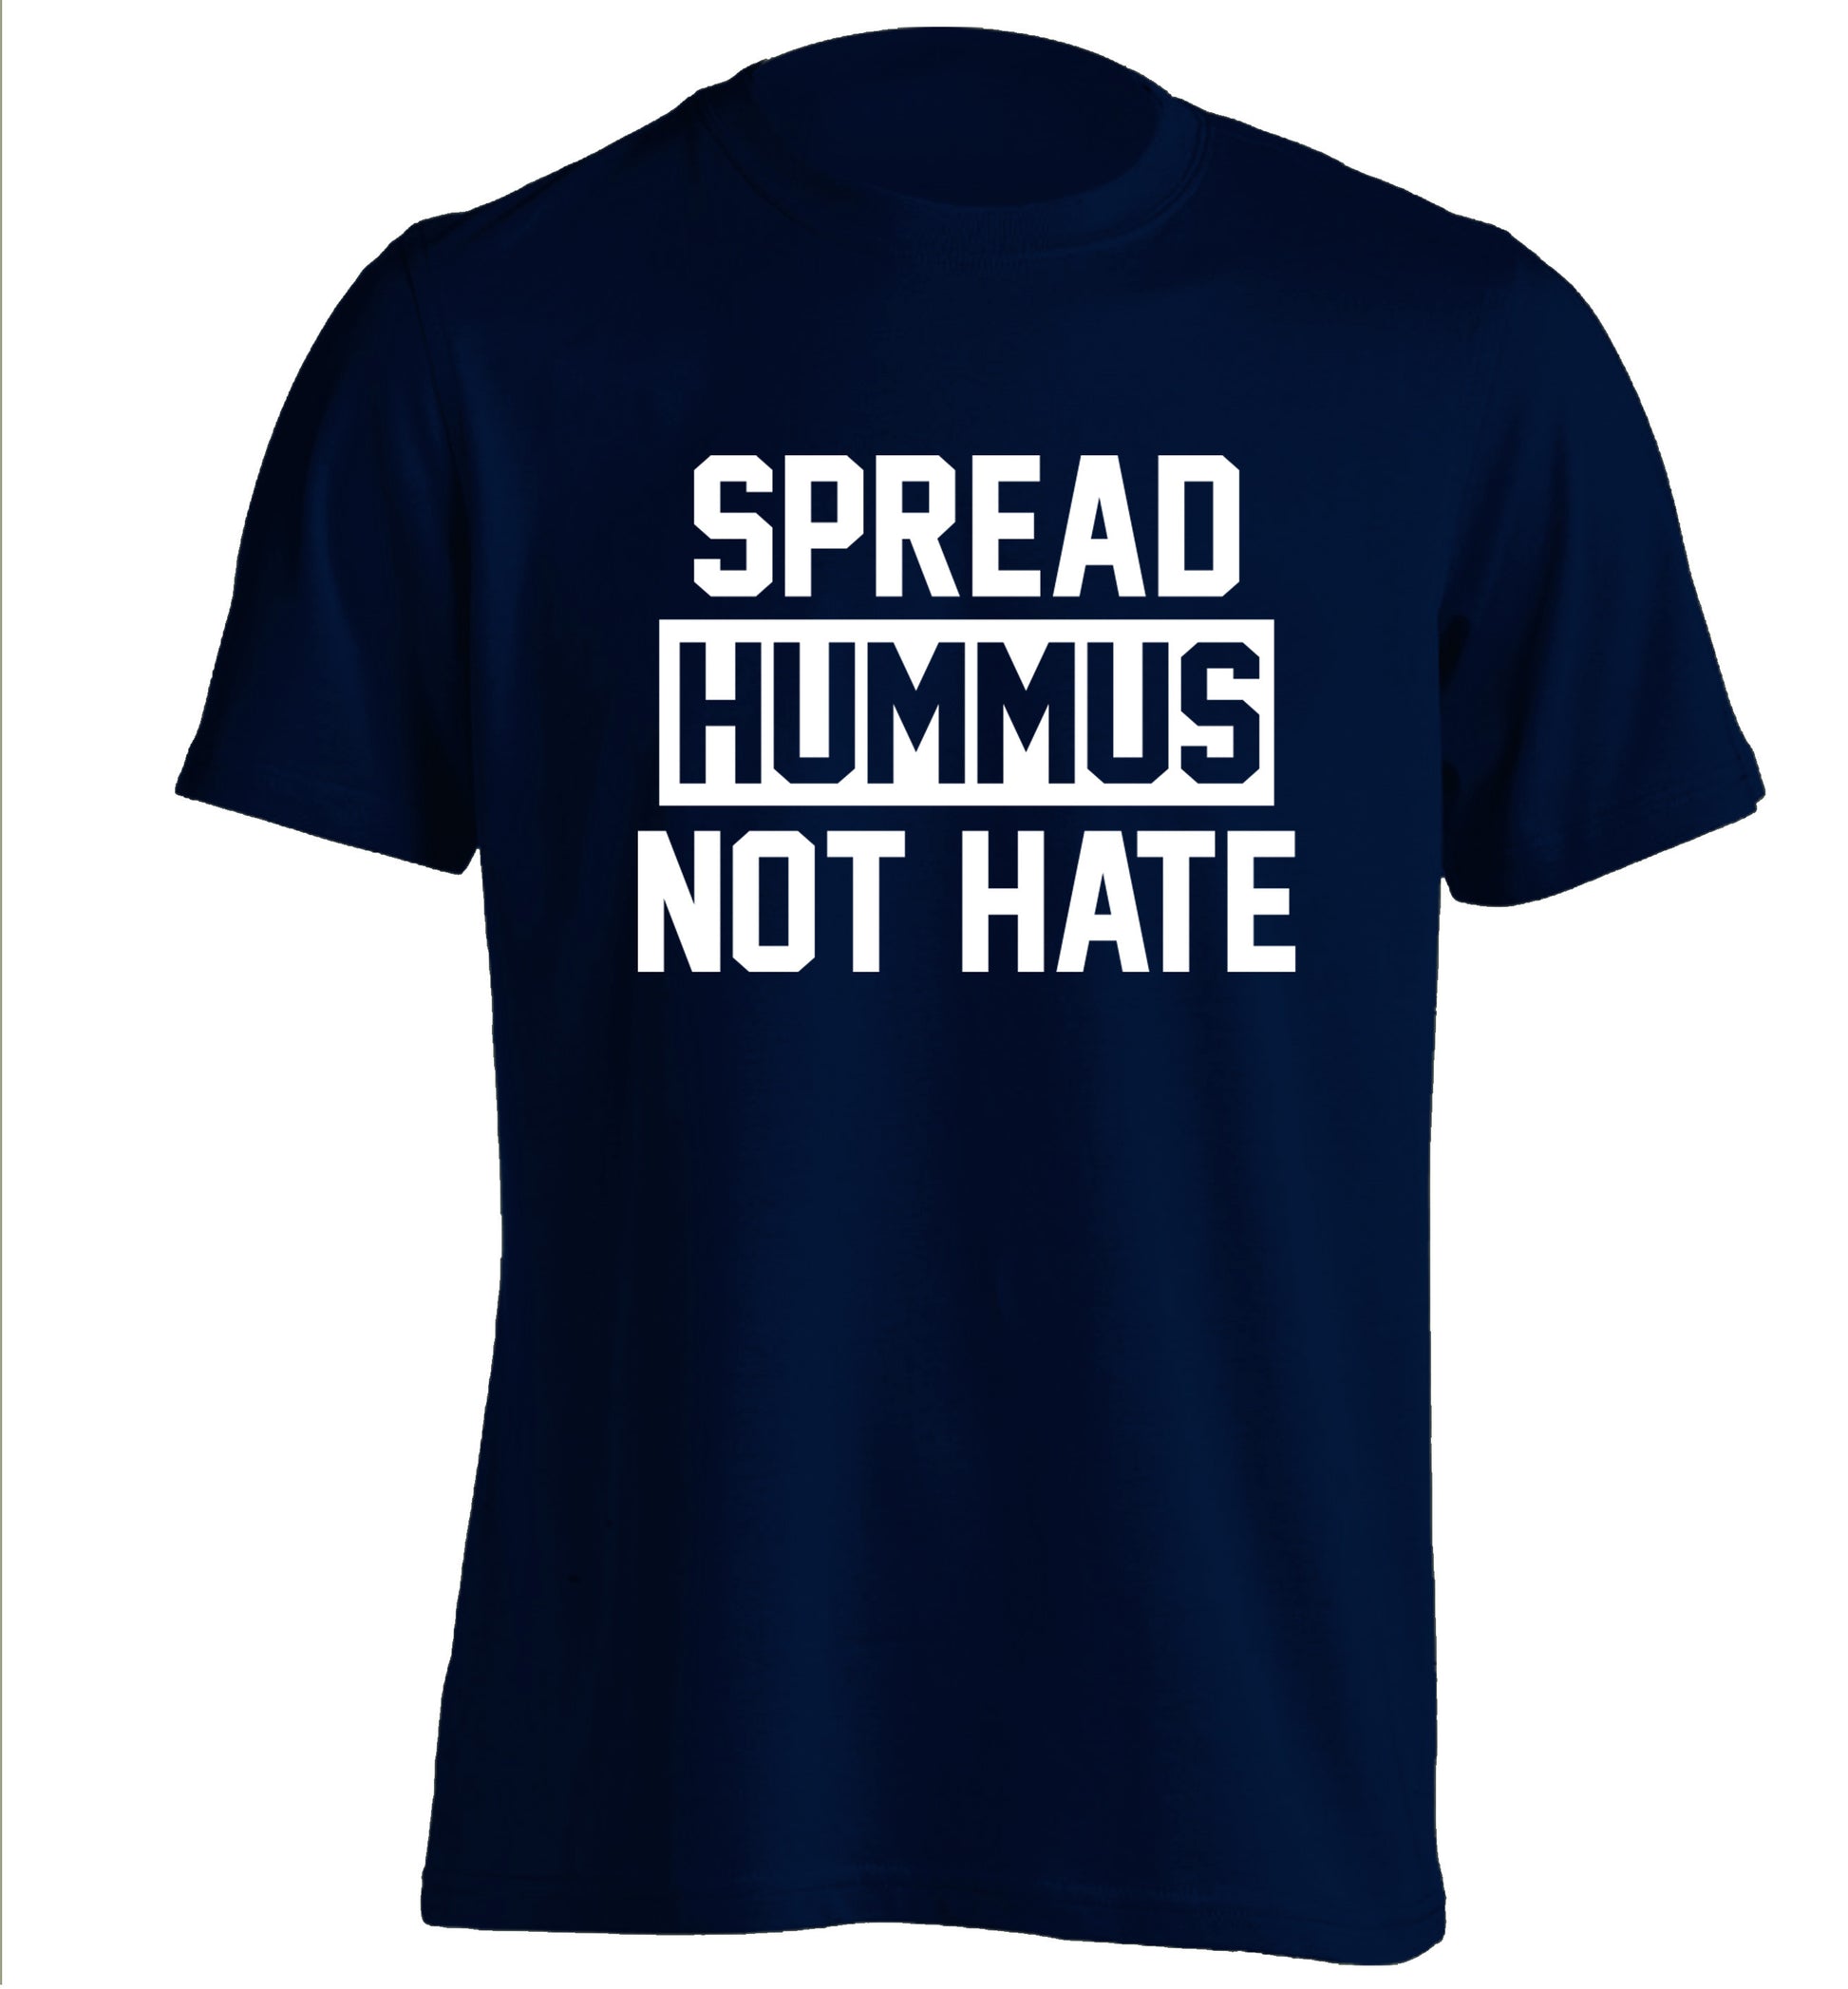 Spread hummus not hate adults unisex navy Tshirt 2XL